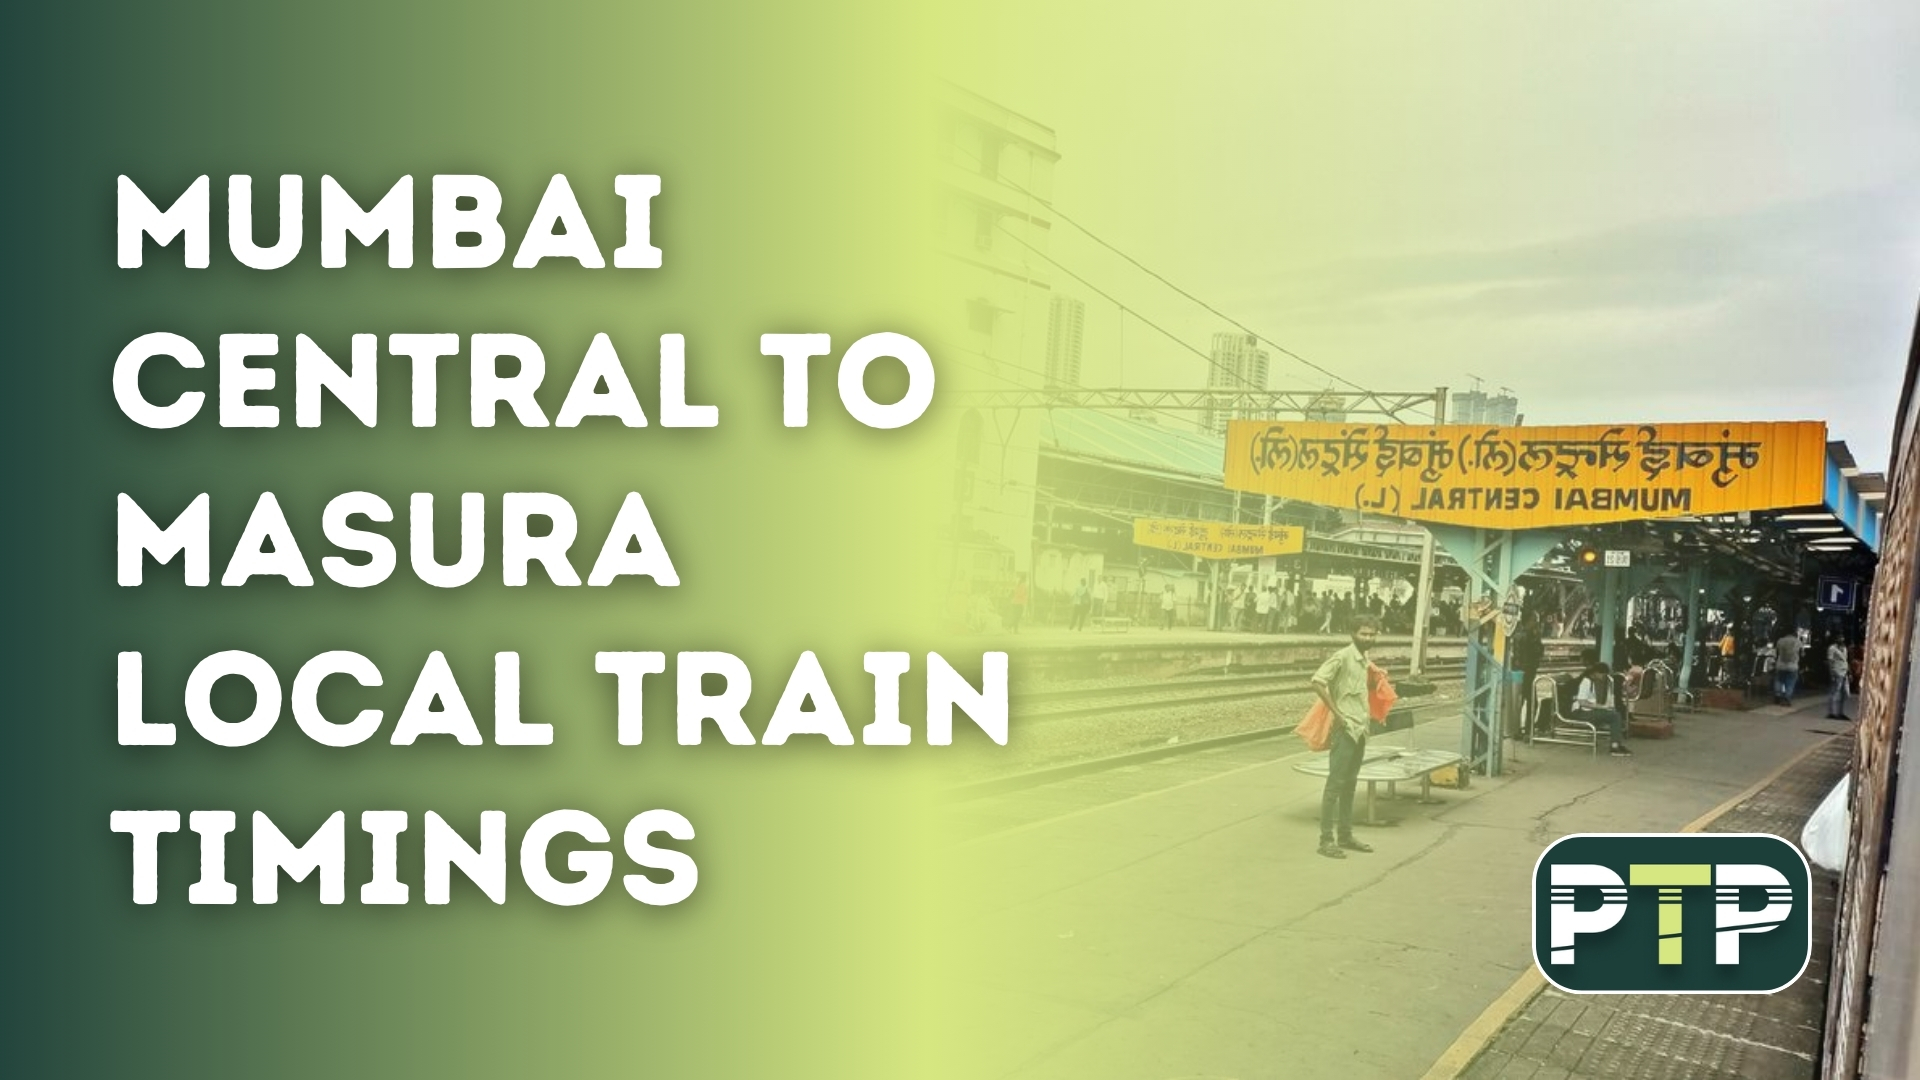 Mumbai Central to Masura Local Train Timings